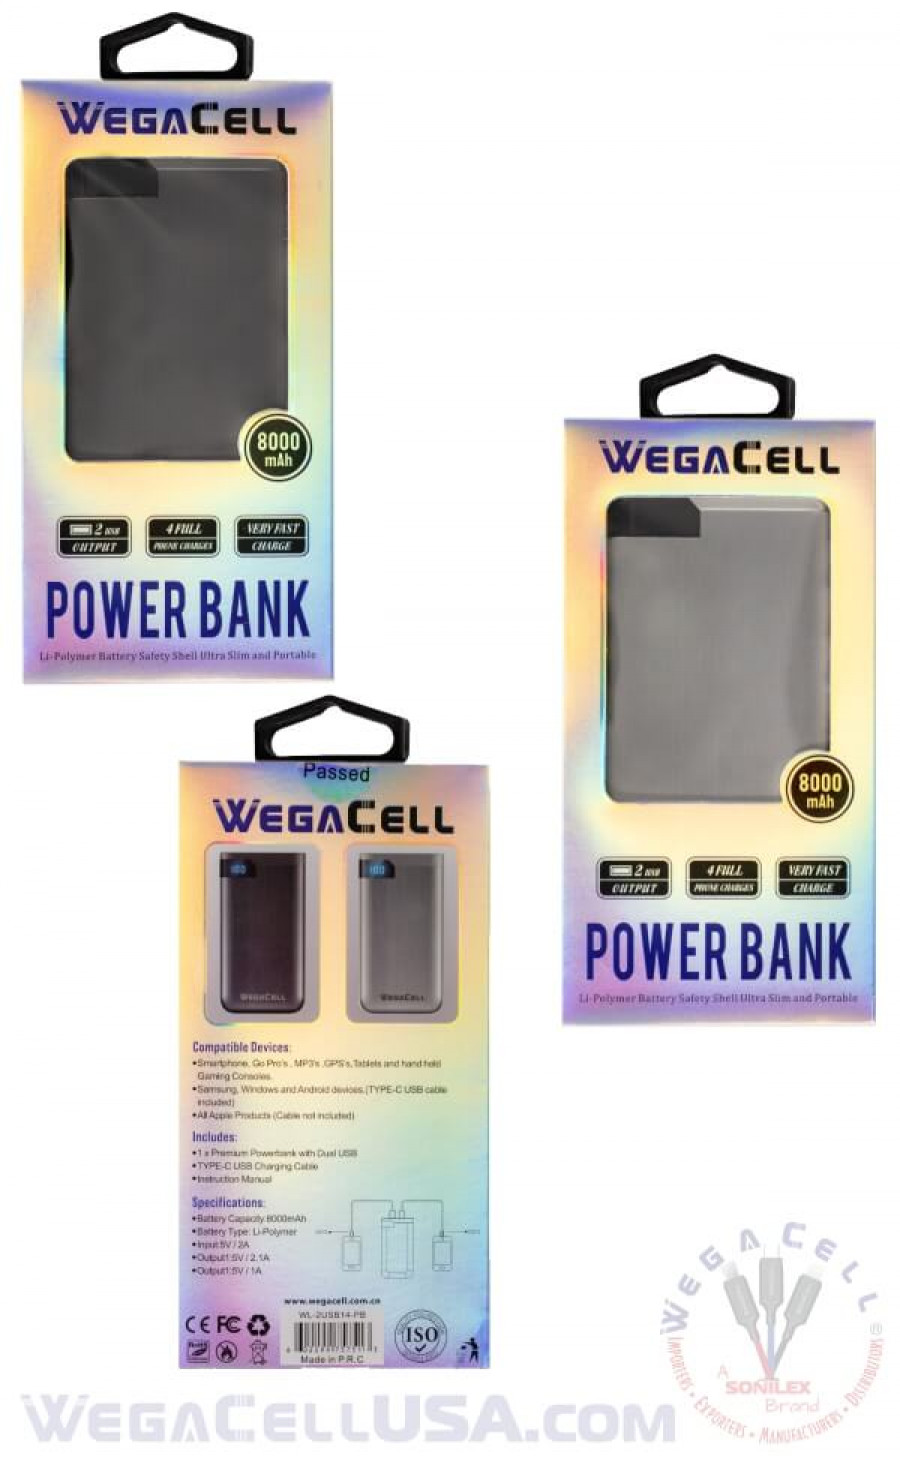 8000 mah power bank fast charging lithium-polymer portable battery pack - wholesale pkg. wegacell: wl-2usb14-pb powerbank 24